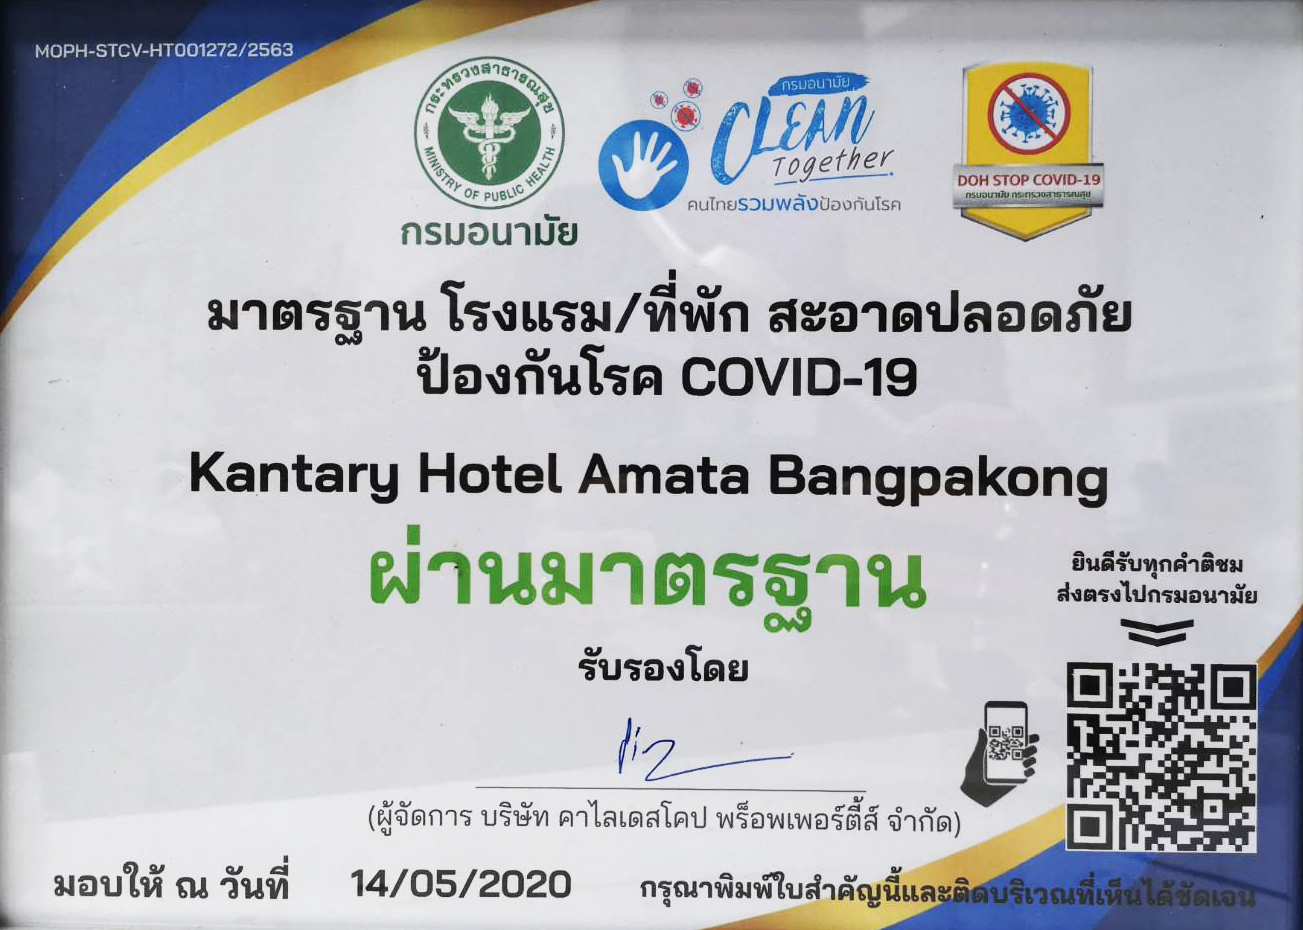 COVID-19 Hygiene - Kantary Hotel Amata Bangpakong